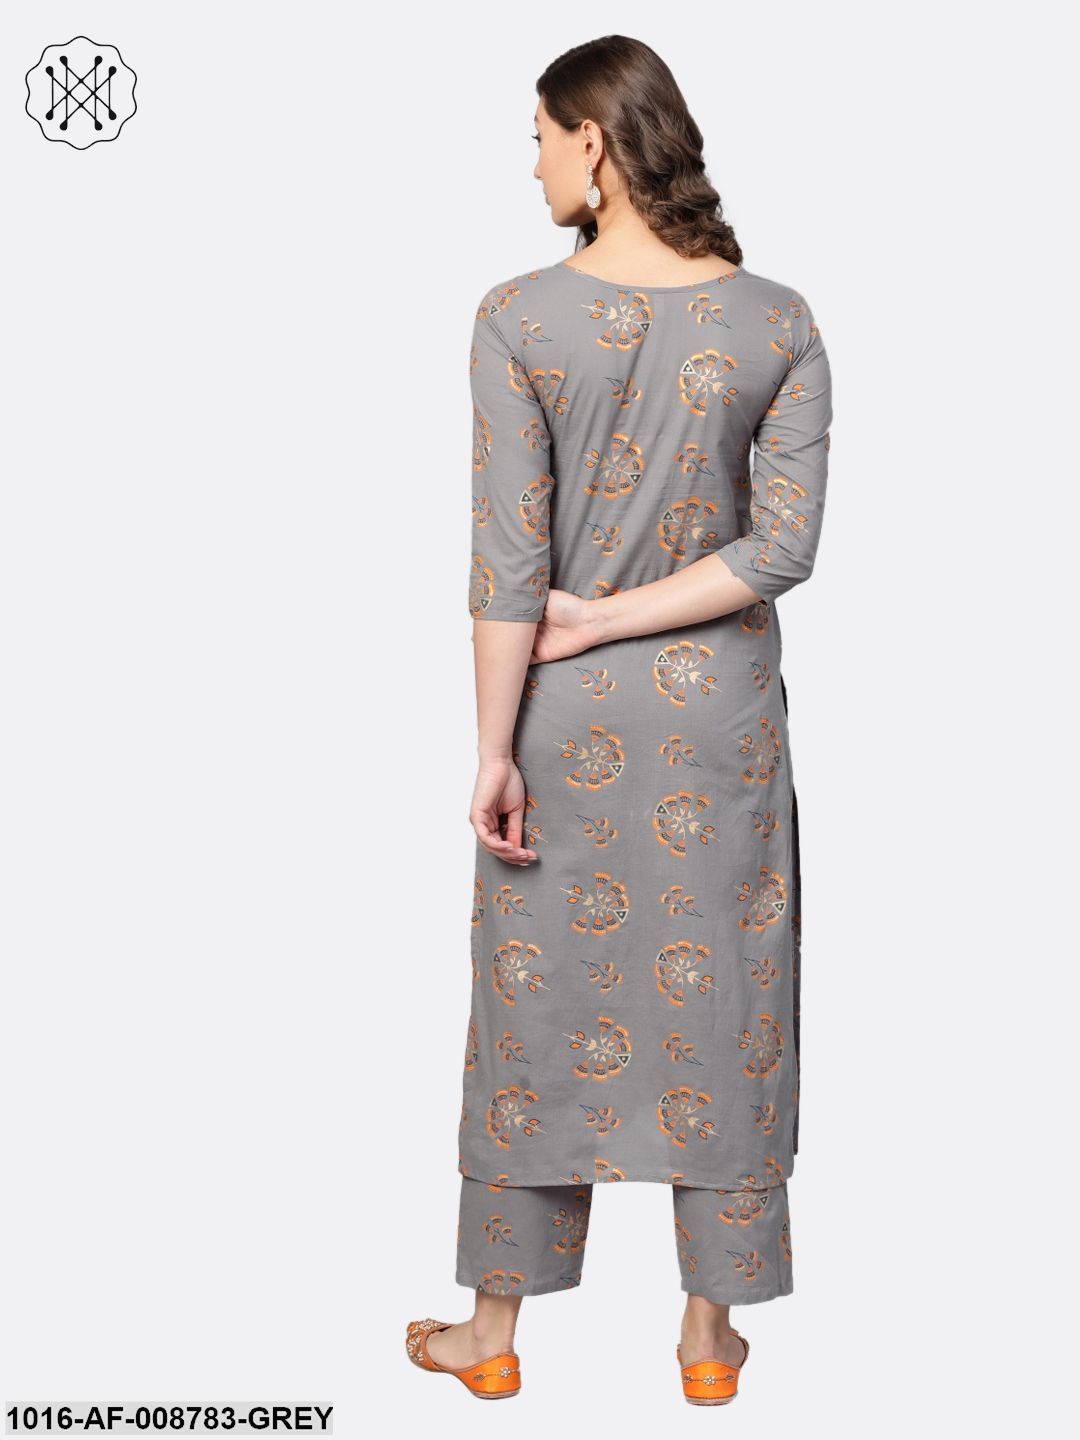 Slate Grey Multi coloured printed Straight kurta Set with Straight Pants